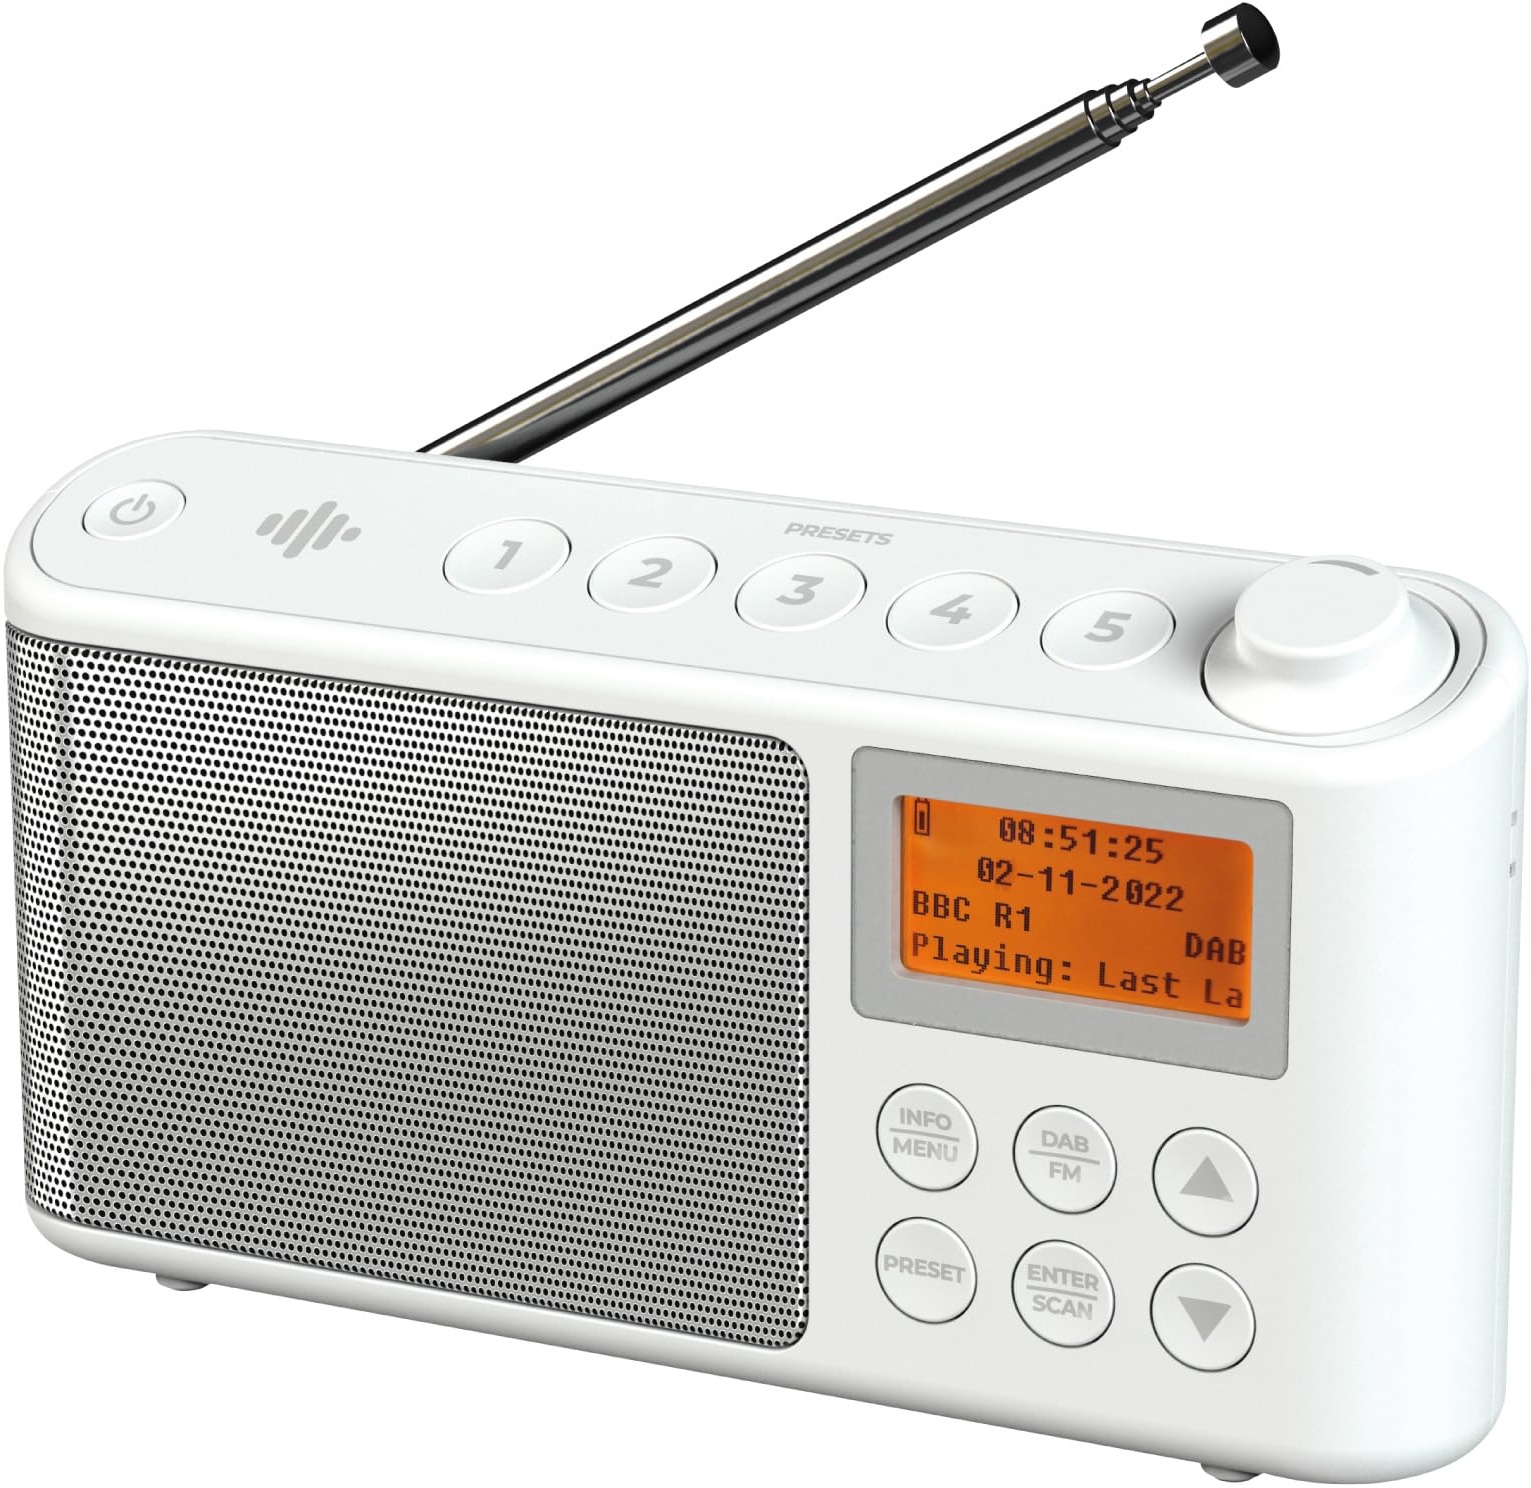 DAB/DAB Plus/FM Radio, Klein Digitalradio Tragbares Batteriebetrieben, Mini Radio Digital Akku & Netzbetrieb Kofferradio, USB-Ladekabel (Weiß)